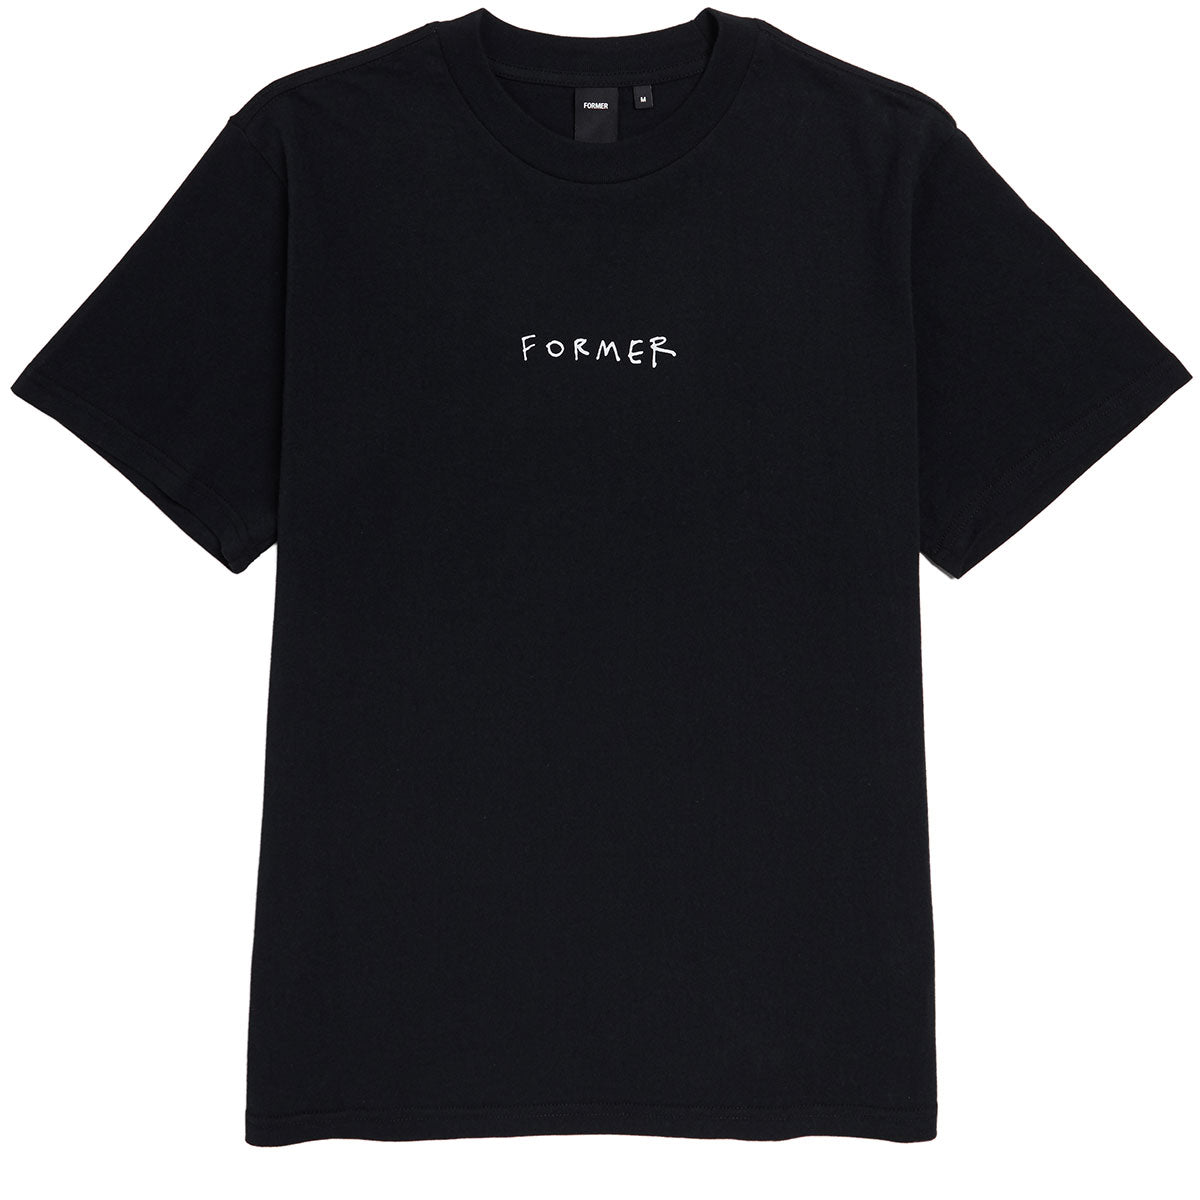 Former Pound T-Shirt - Black image 2